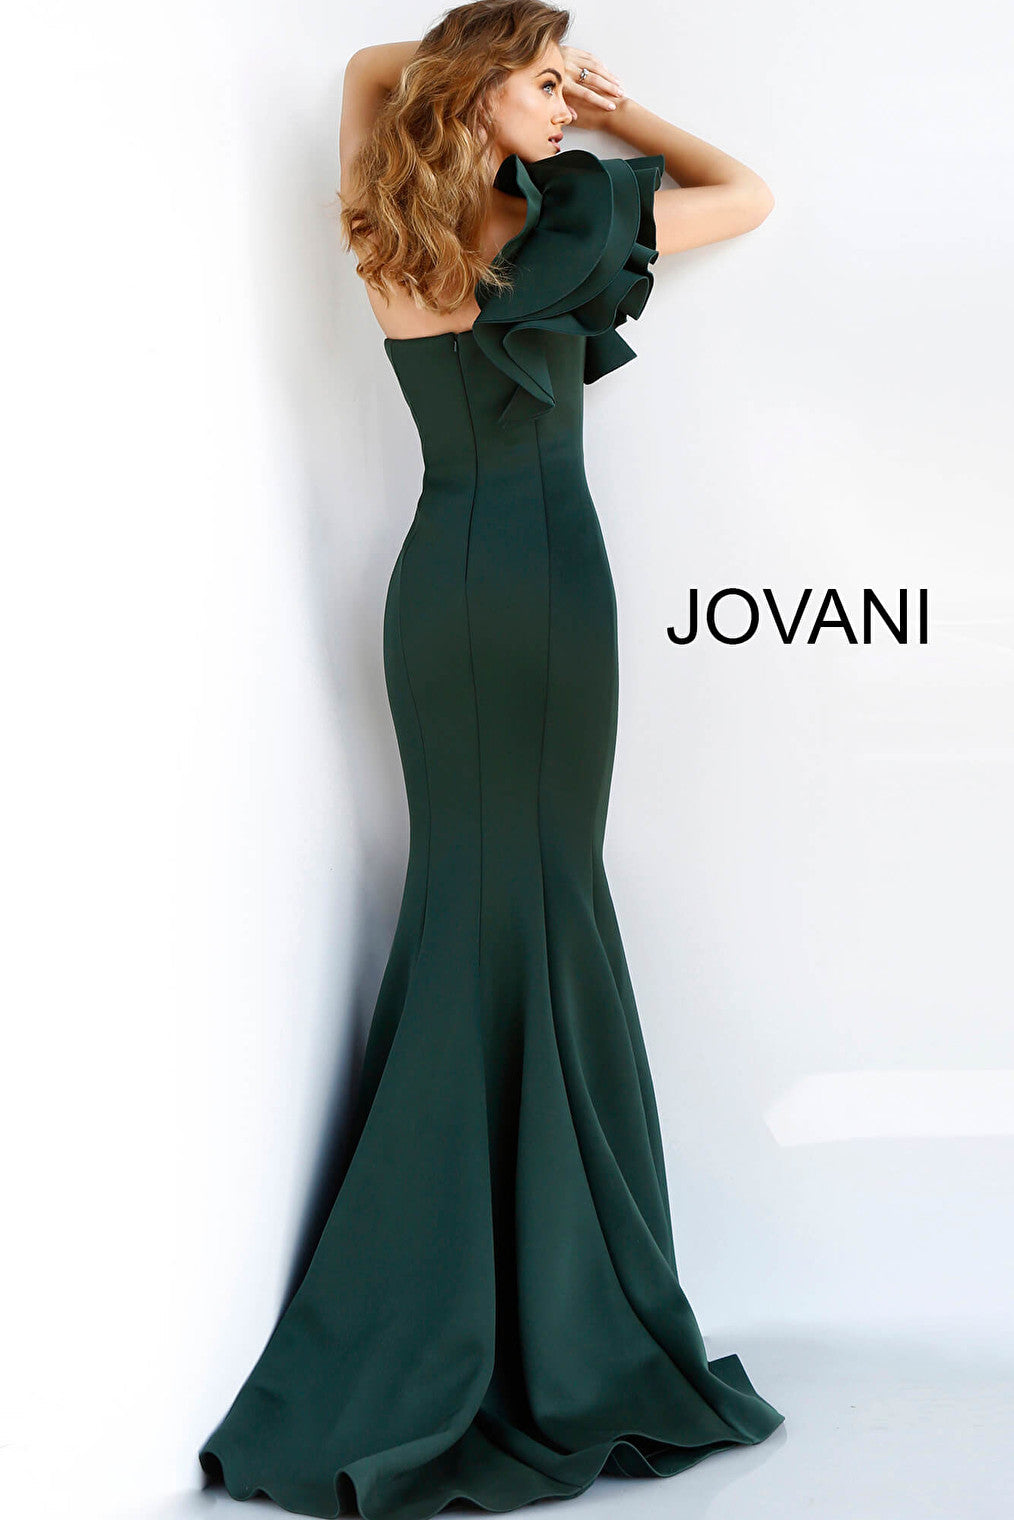 Jovani green scuba formal dress 63994